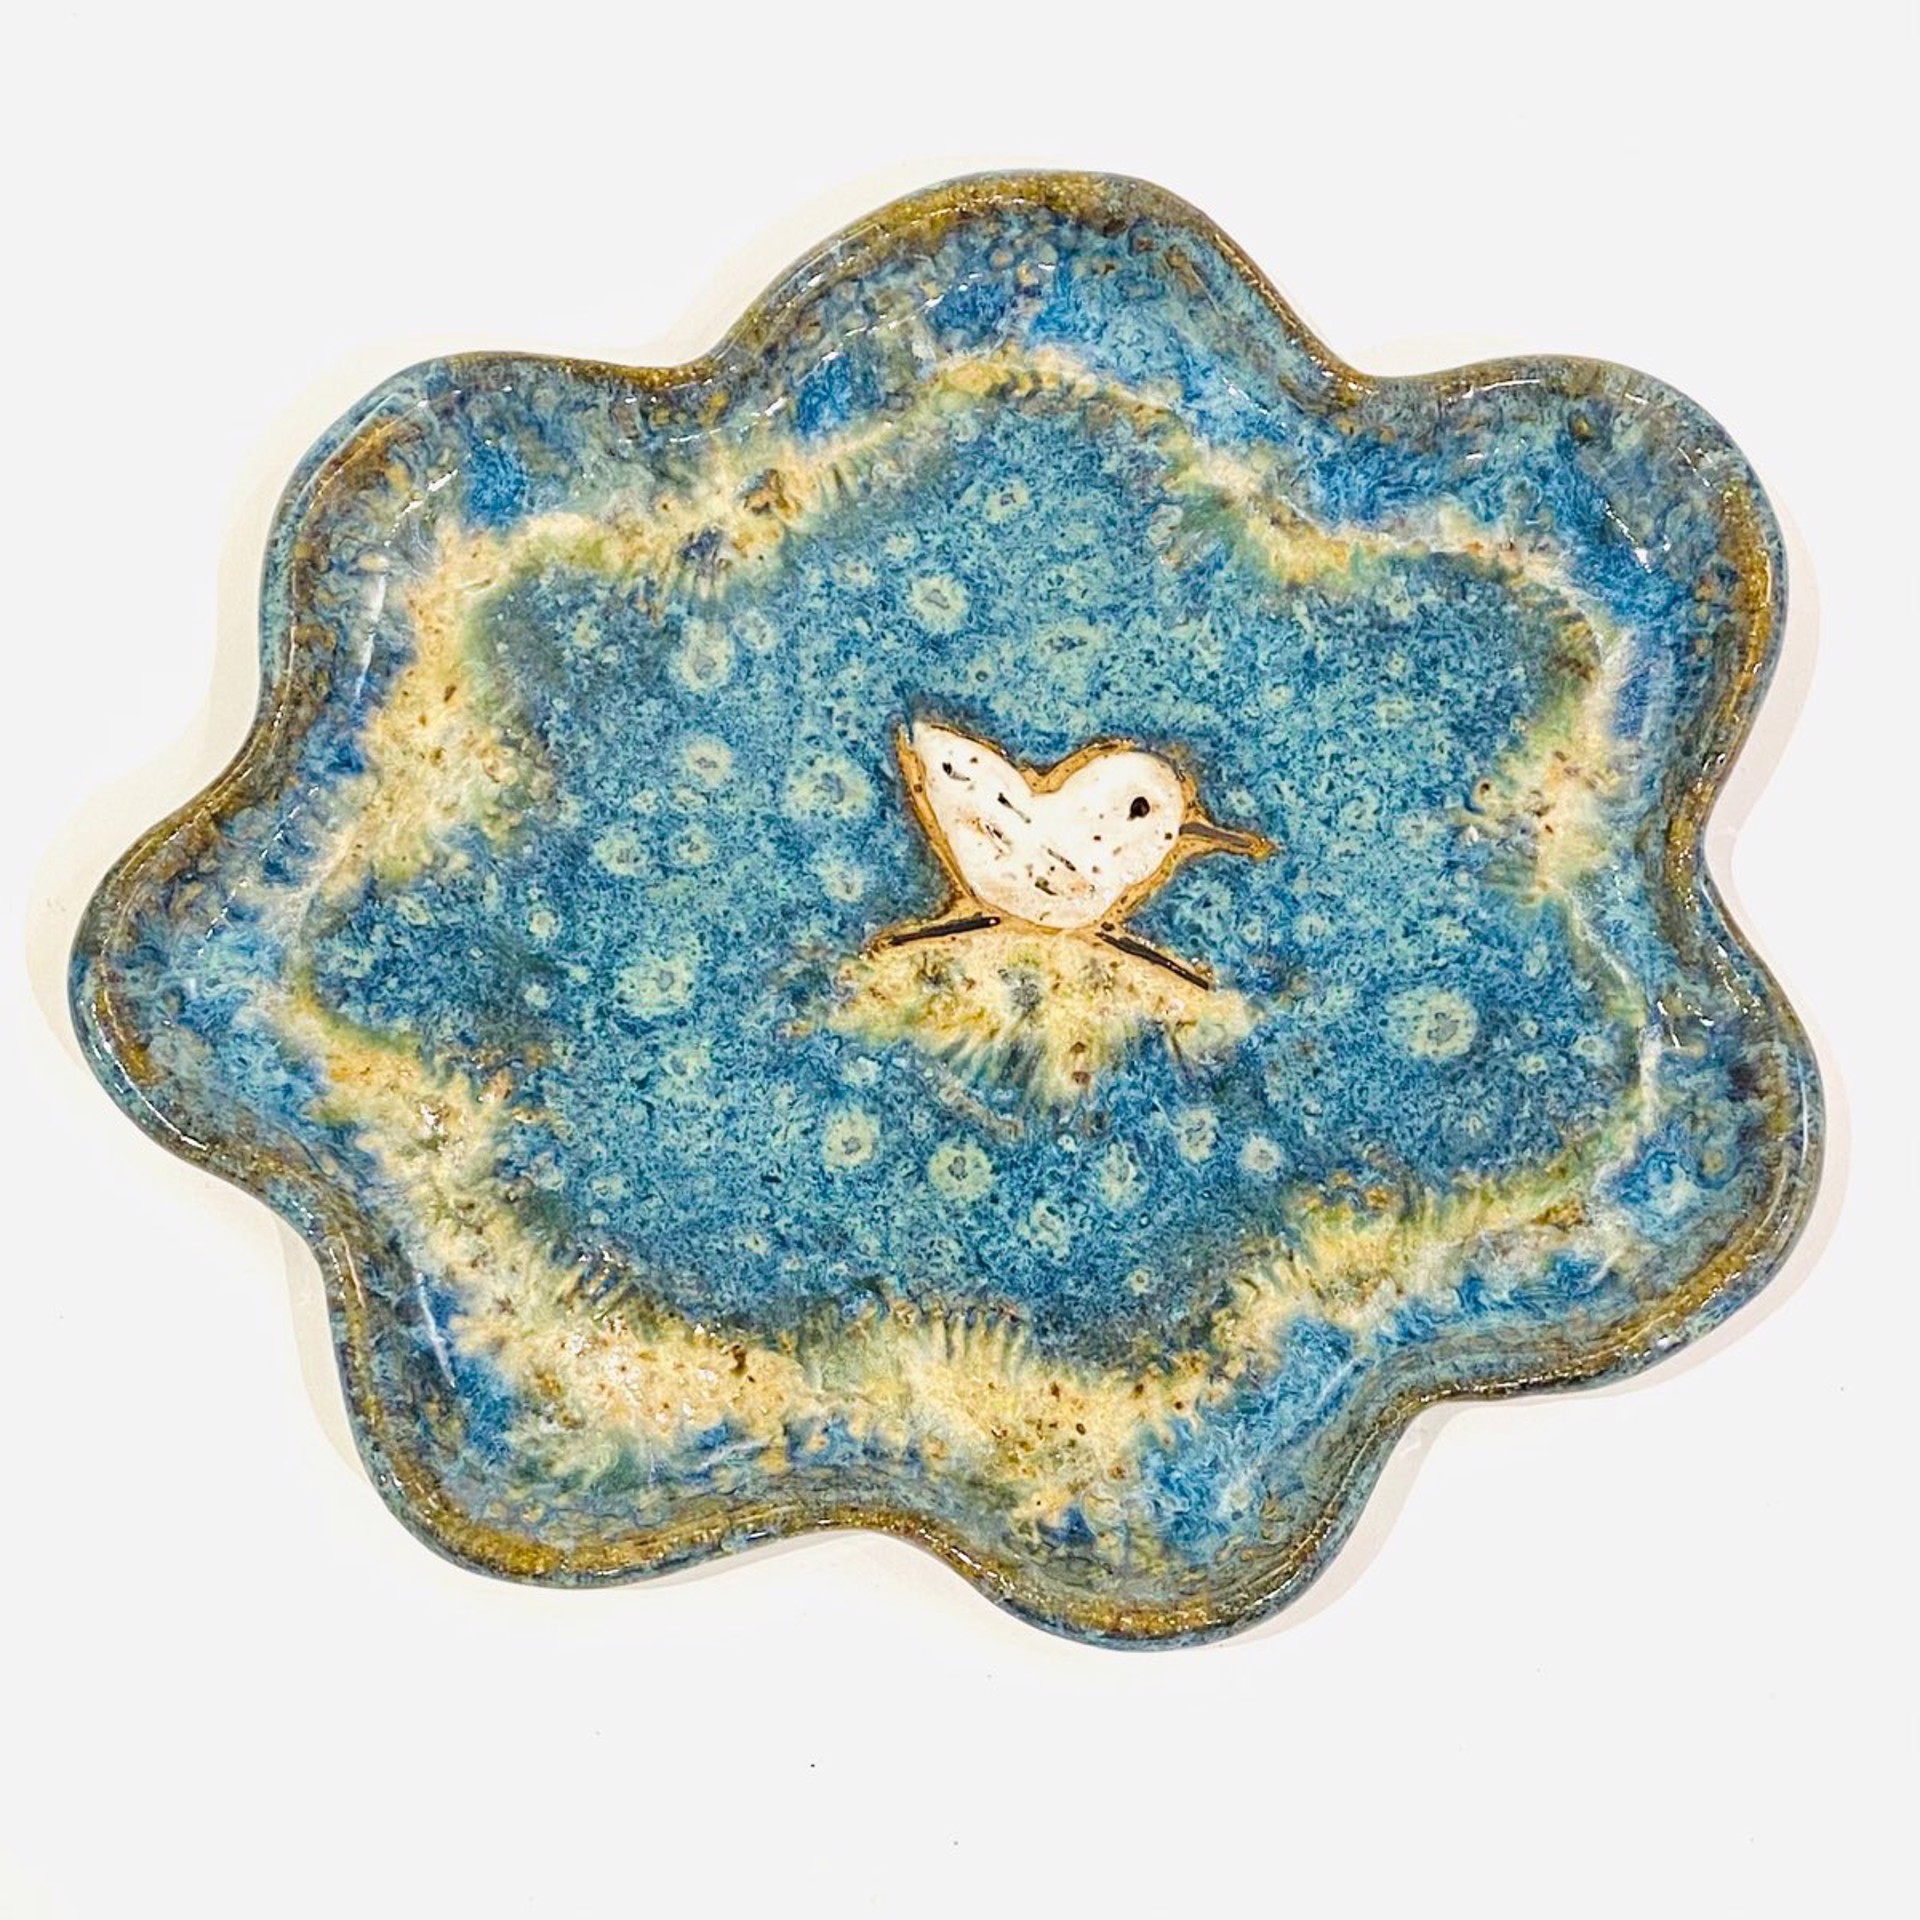 LG22-913 Small Plate with Sandpiper (Blue Glaze) by Jim & Steffi Logan